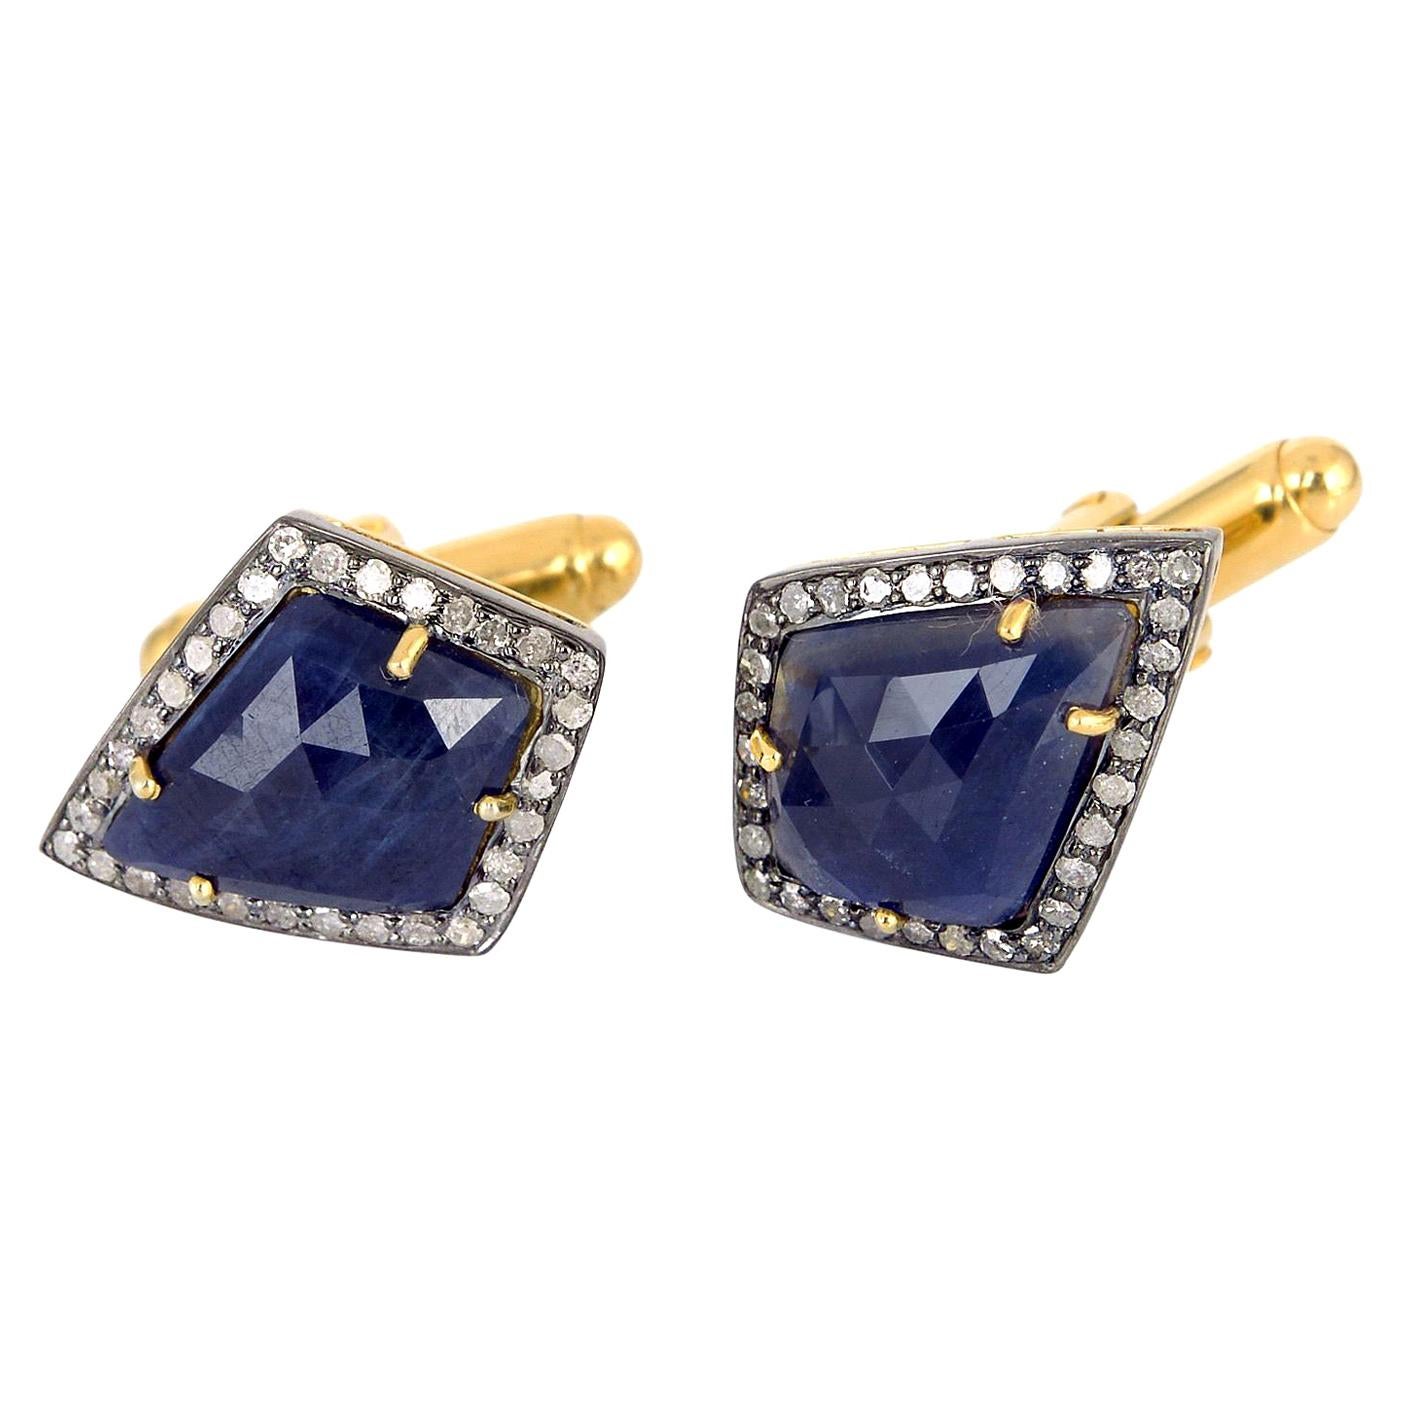 22.64 Carat Blue Sapphire Diamond Cufflinks